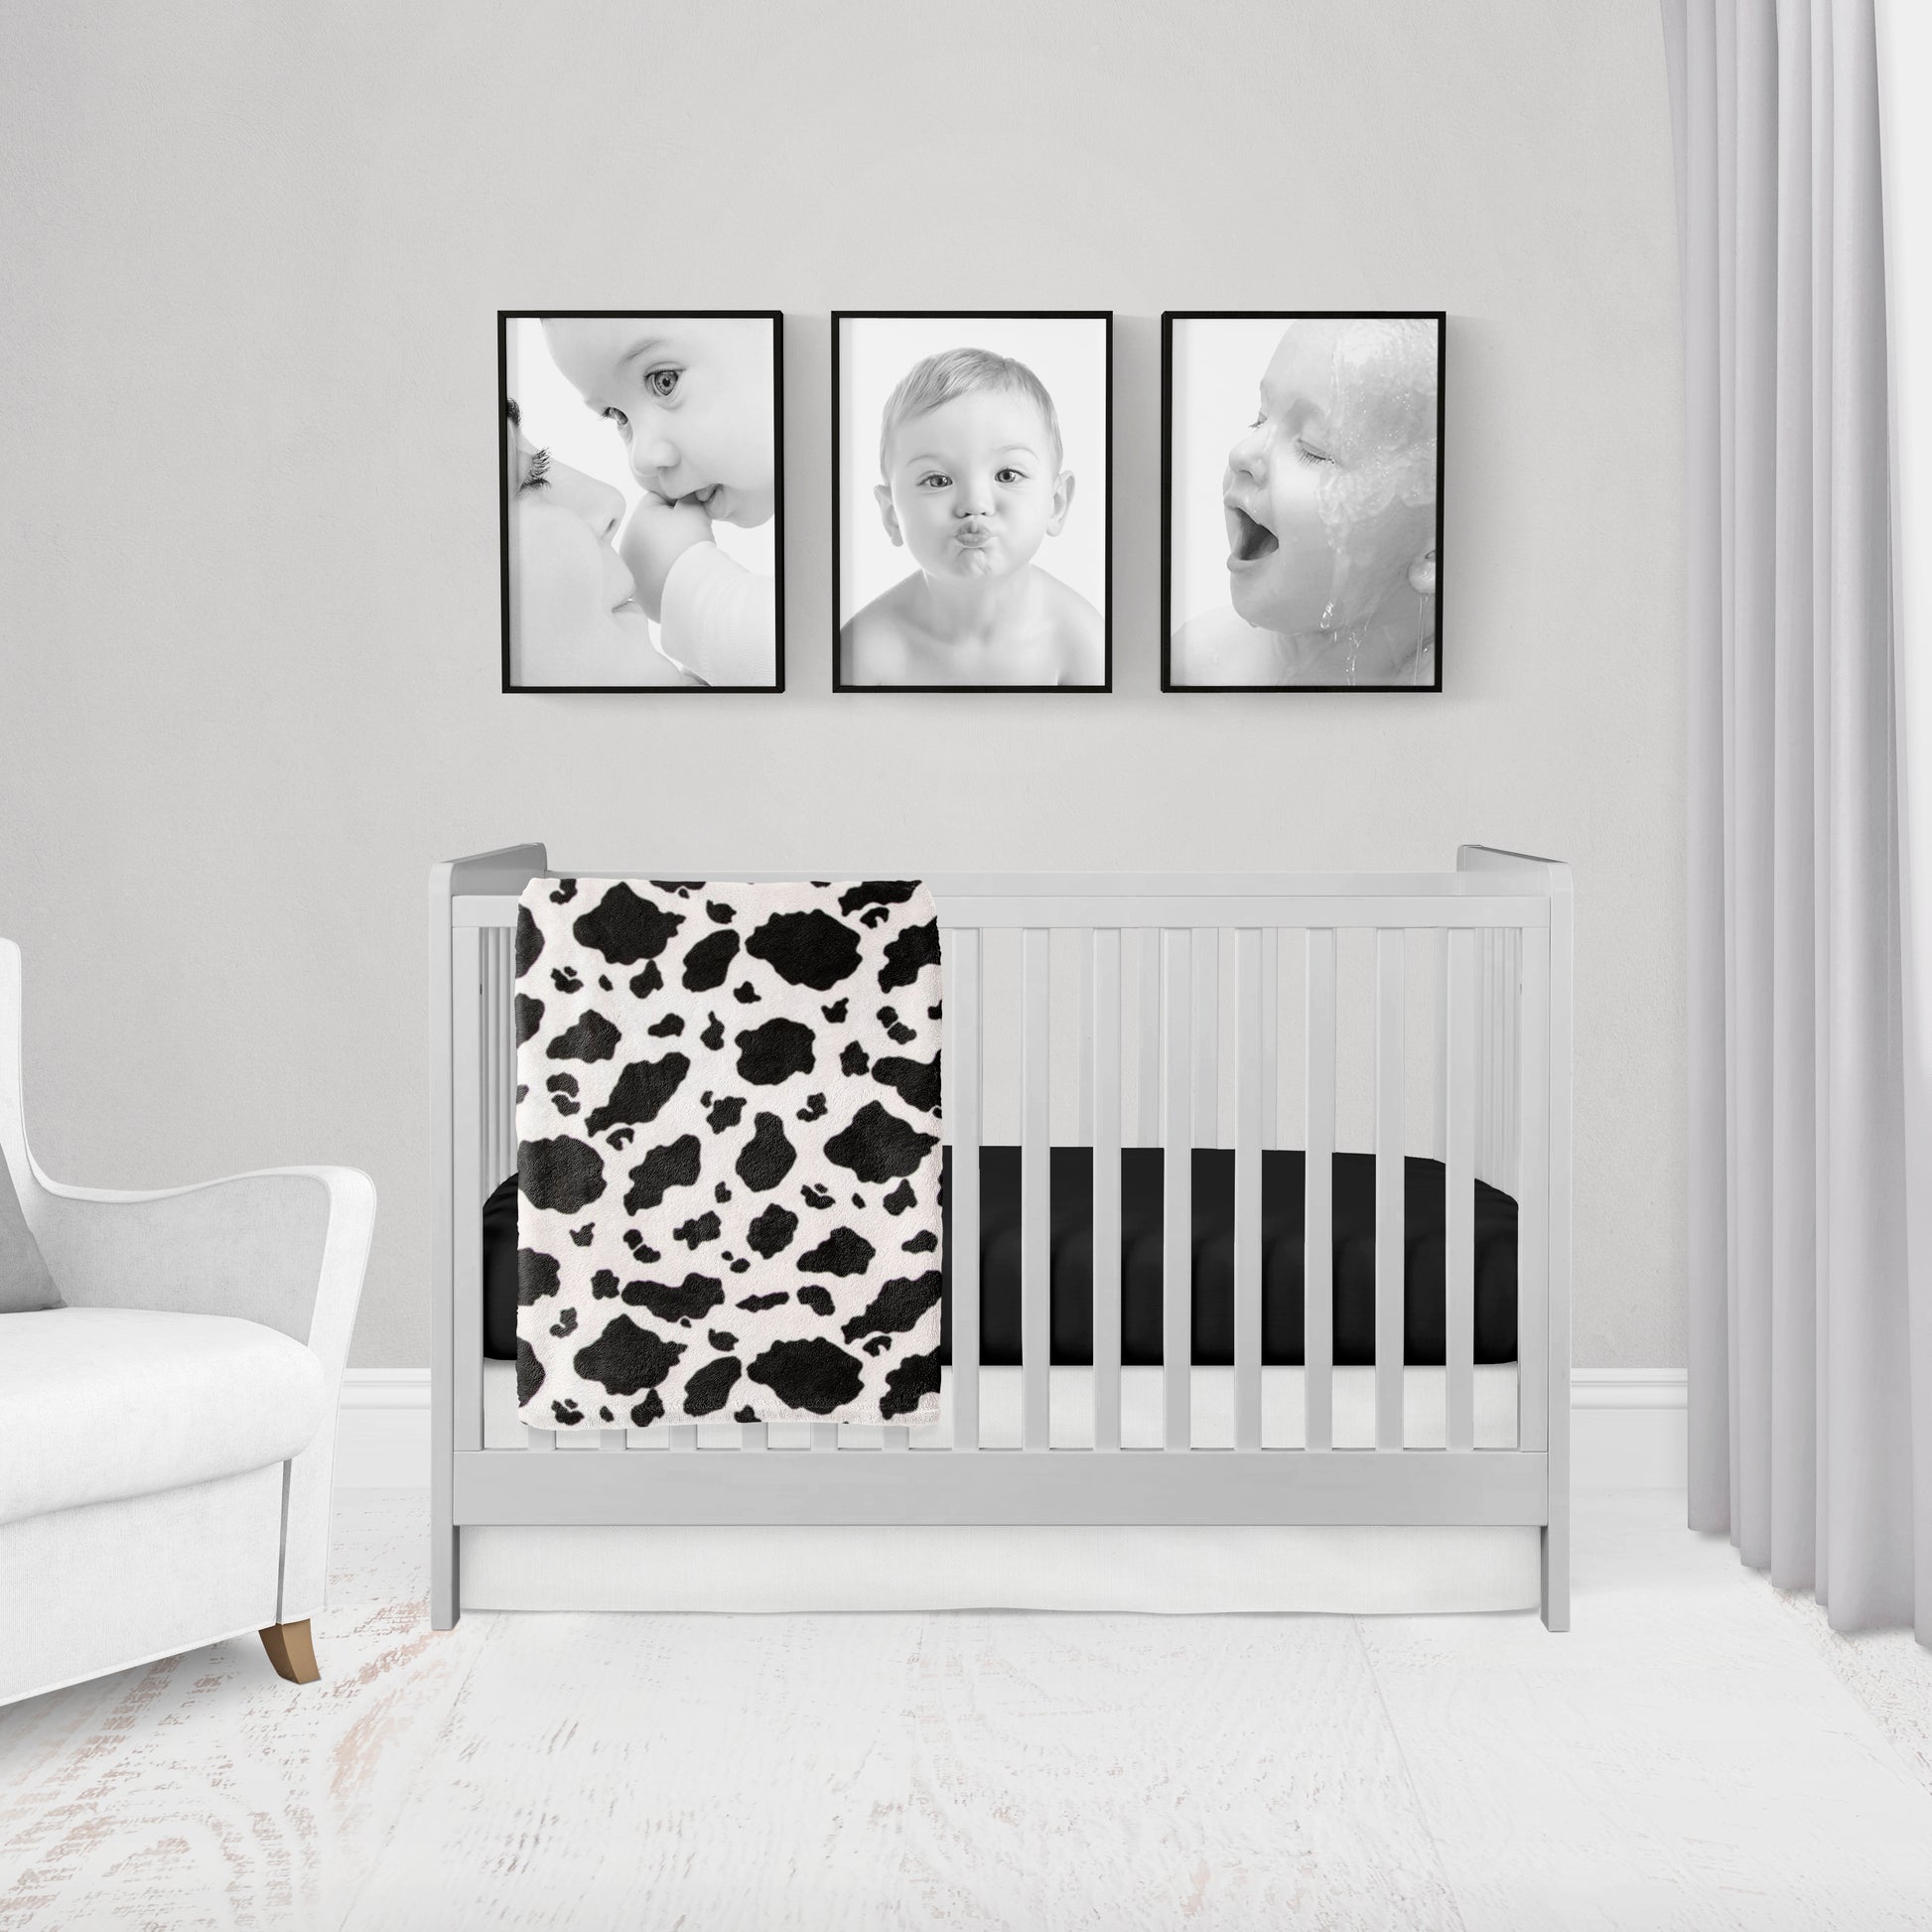 2-piece set includes the cow print blanket & cow print crib sheet or black crib sheet